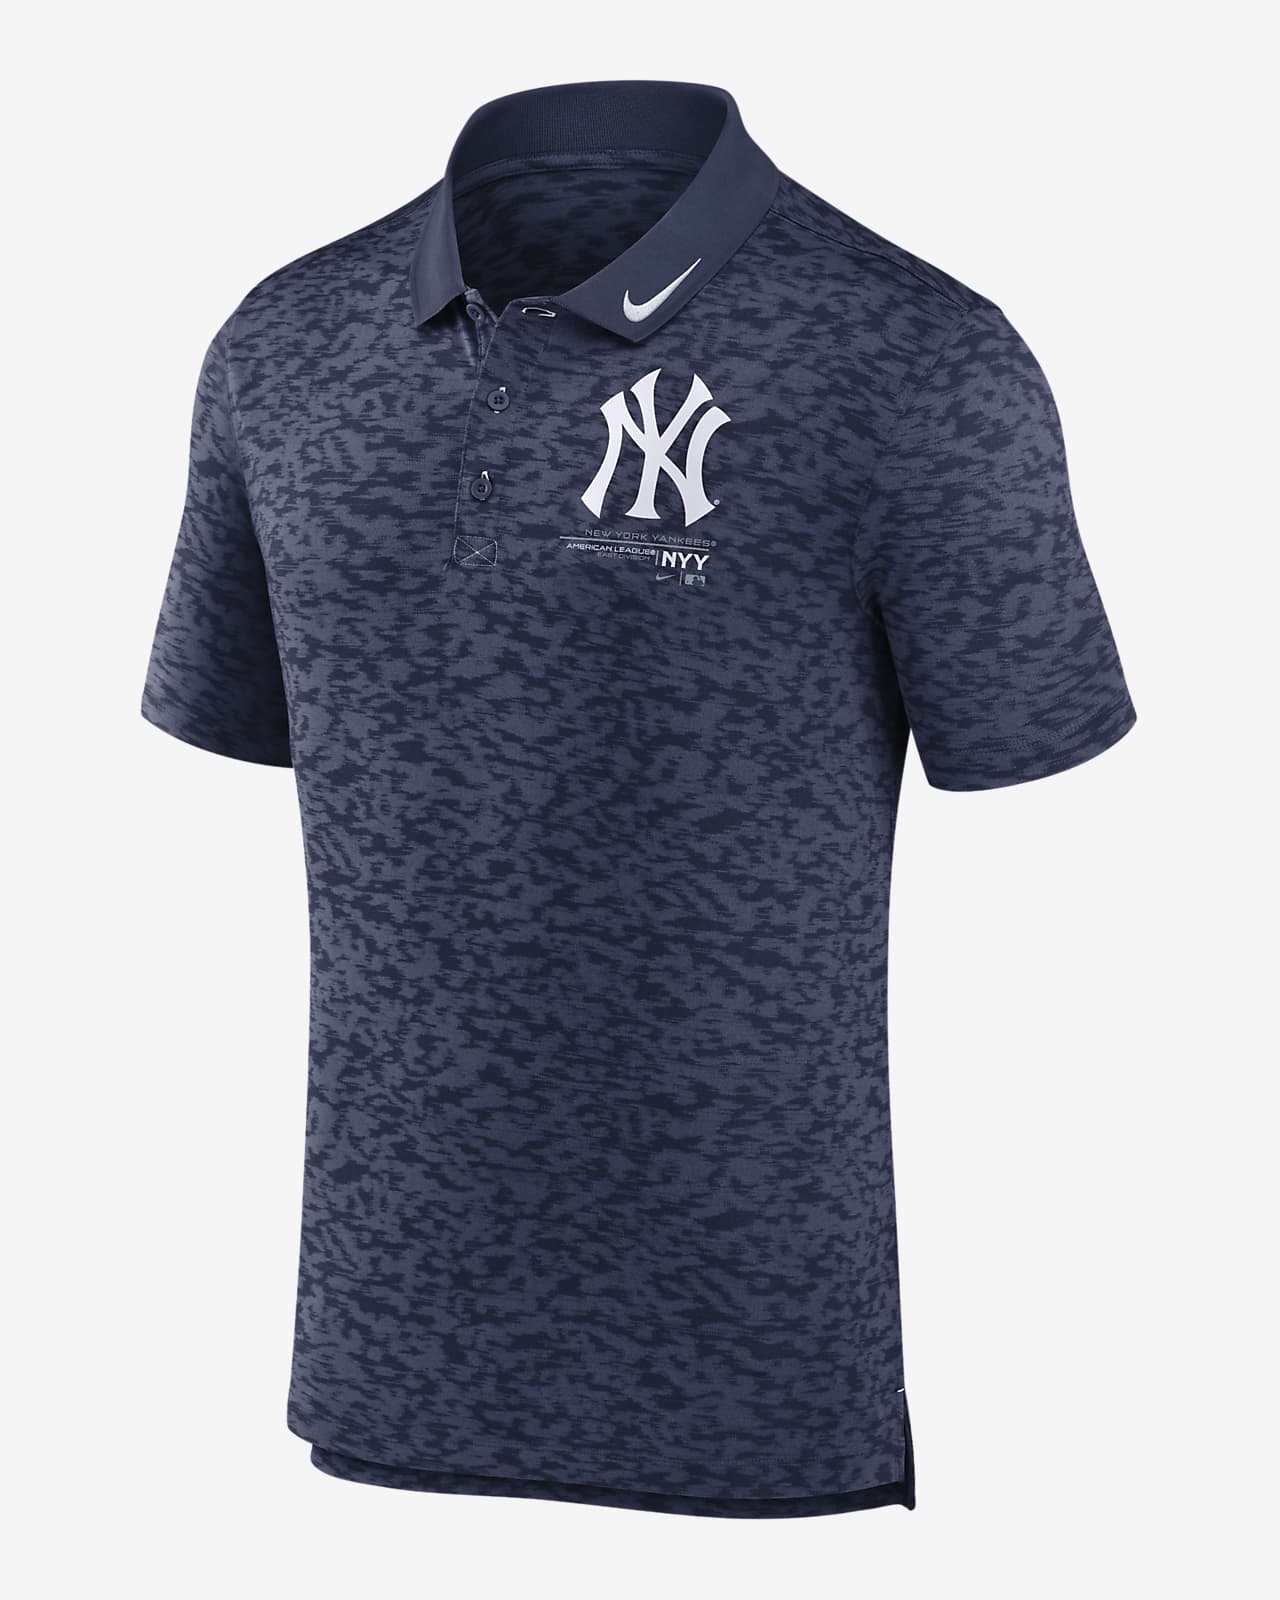 Nike Next Level (MLB New York Yankees) Men's Polo